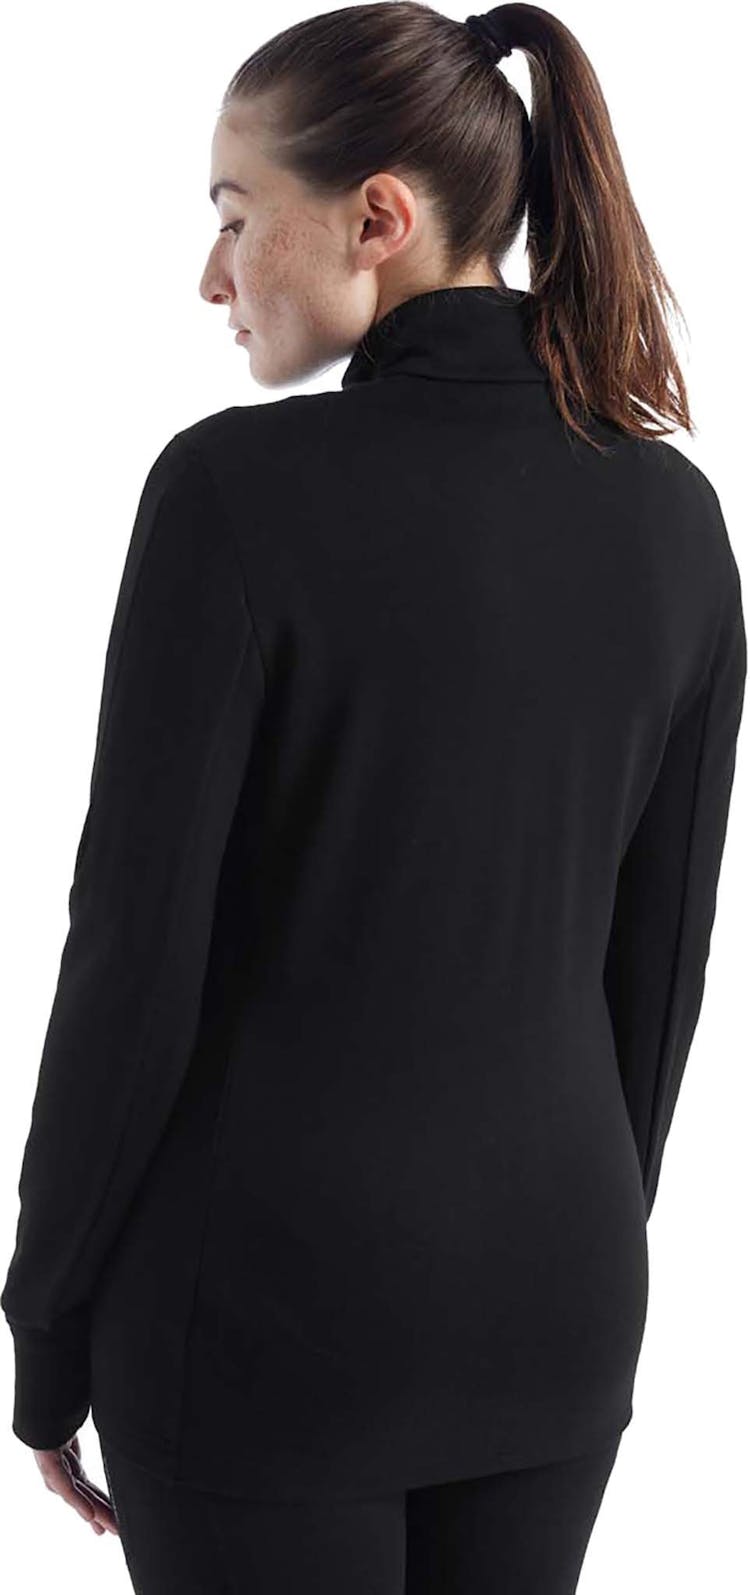 Product gallery image number 8 for product Merino Quantum III Long Sleeve Zip Top - Women's